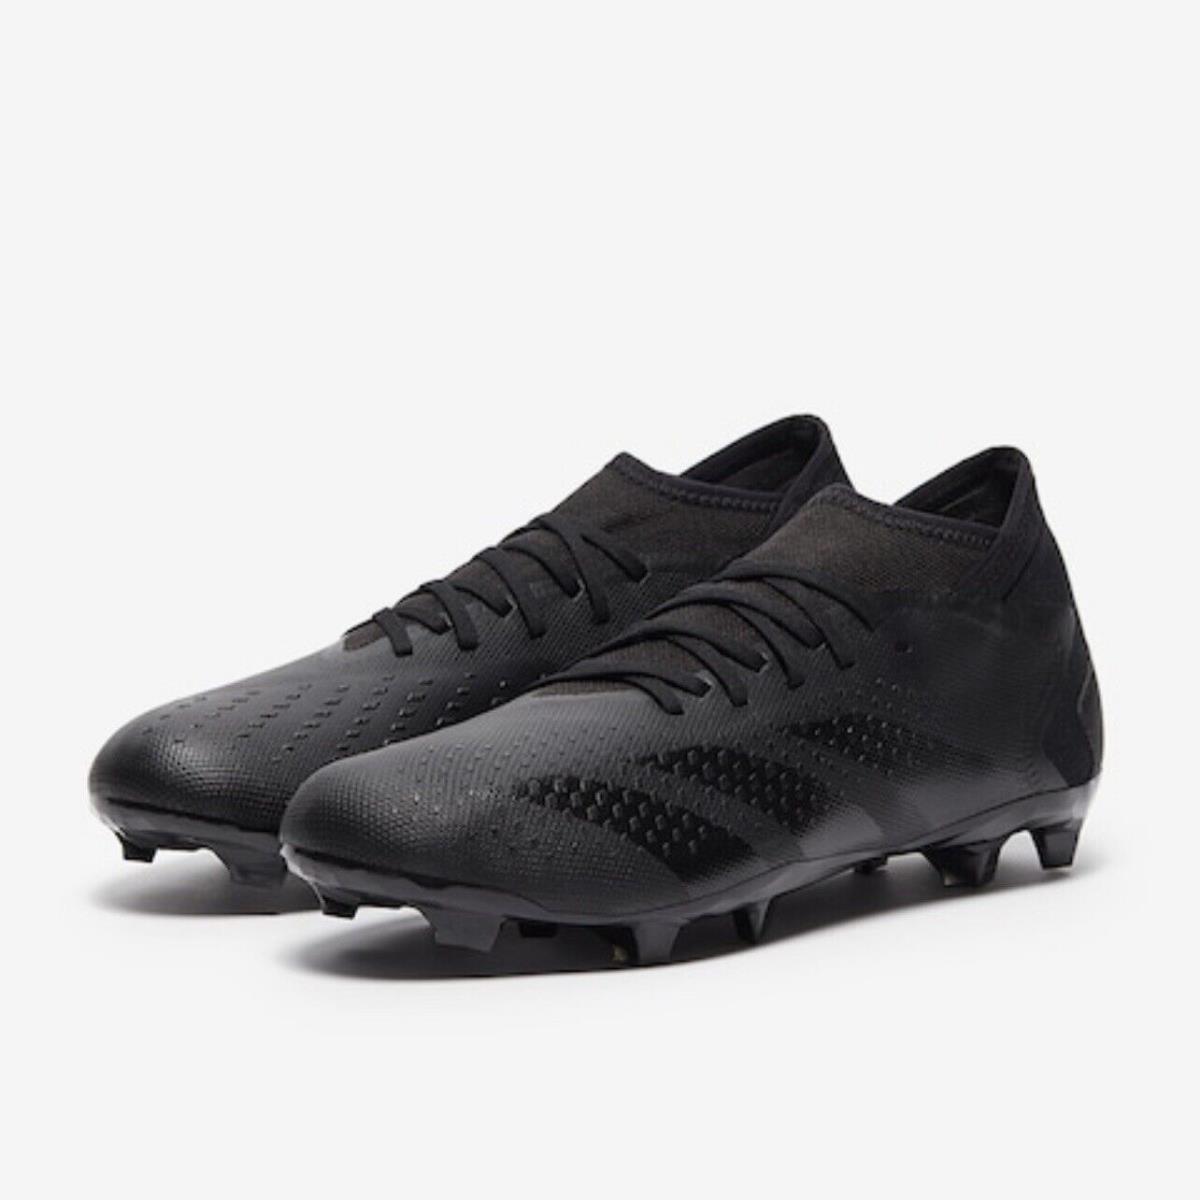 Adidas Predator Accuracy 3 FG Men s Soccer Football Shoe Black Cleats 593